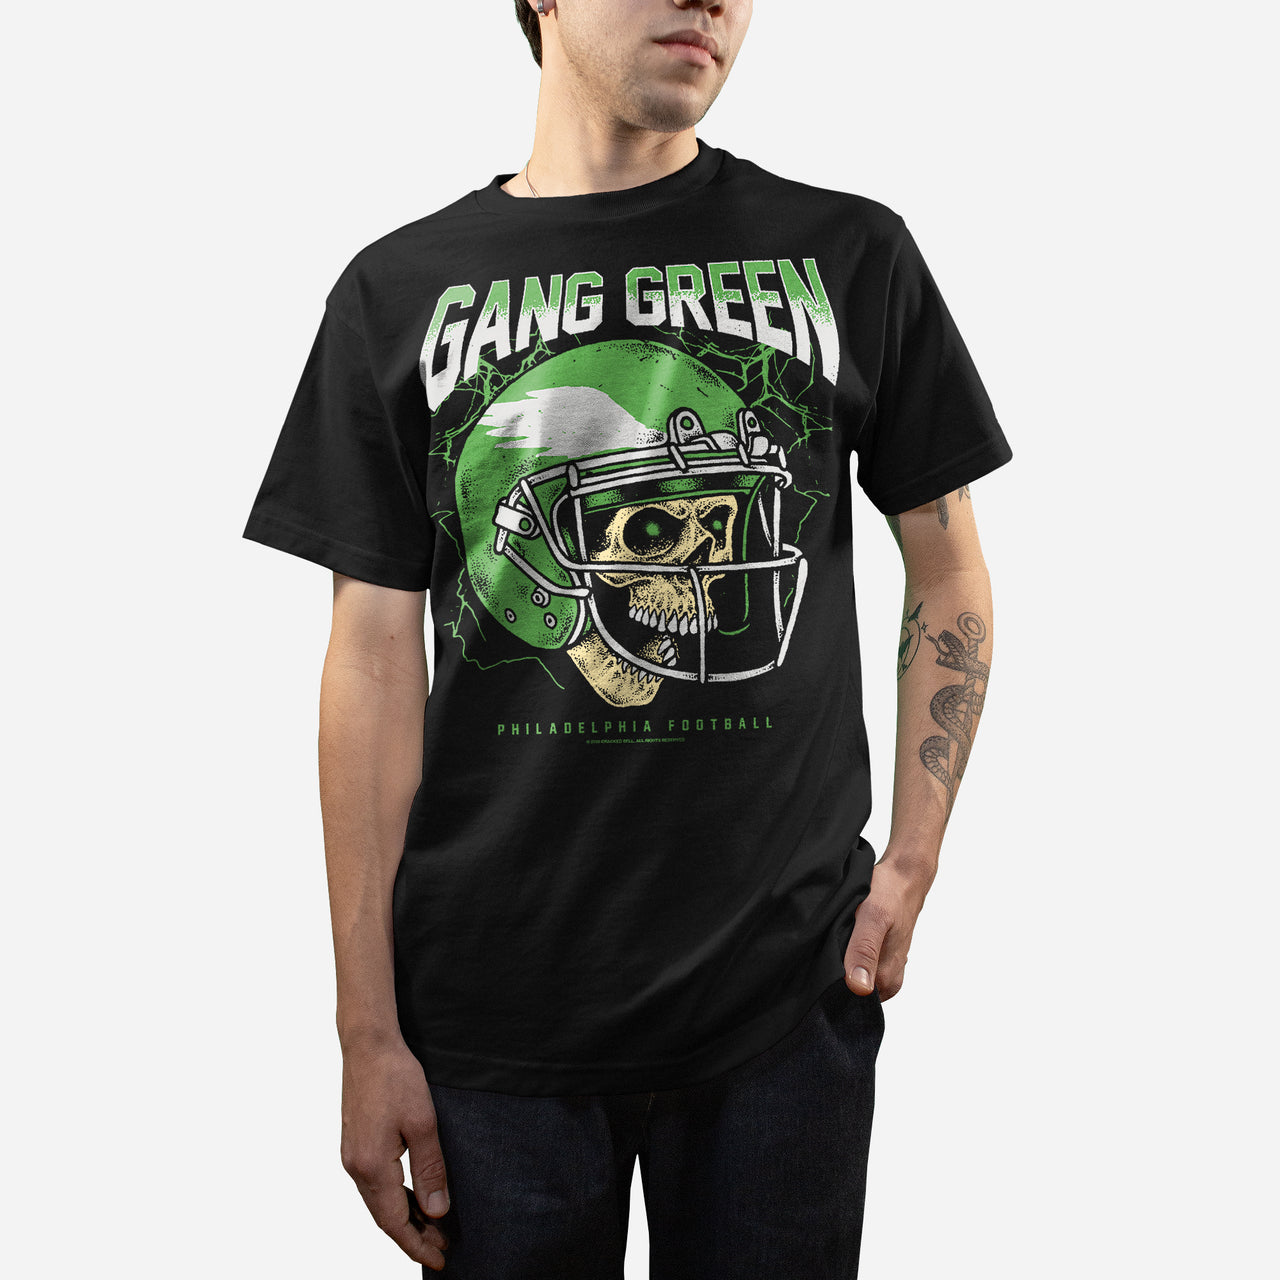 "Gang Green" Shirt